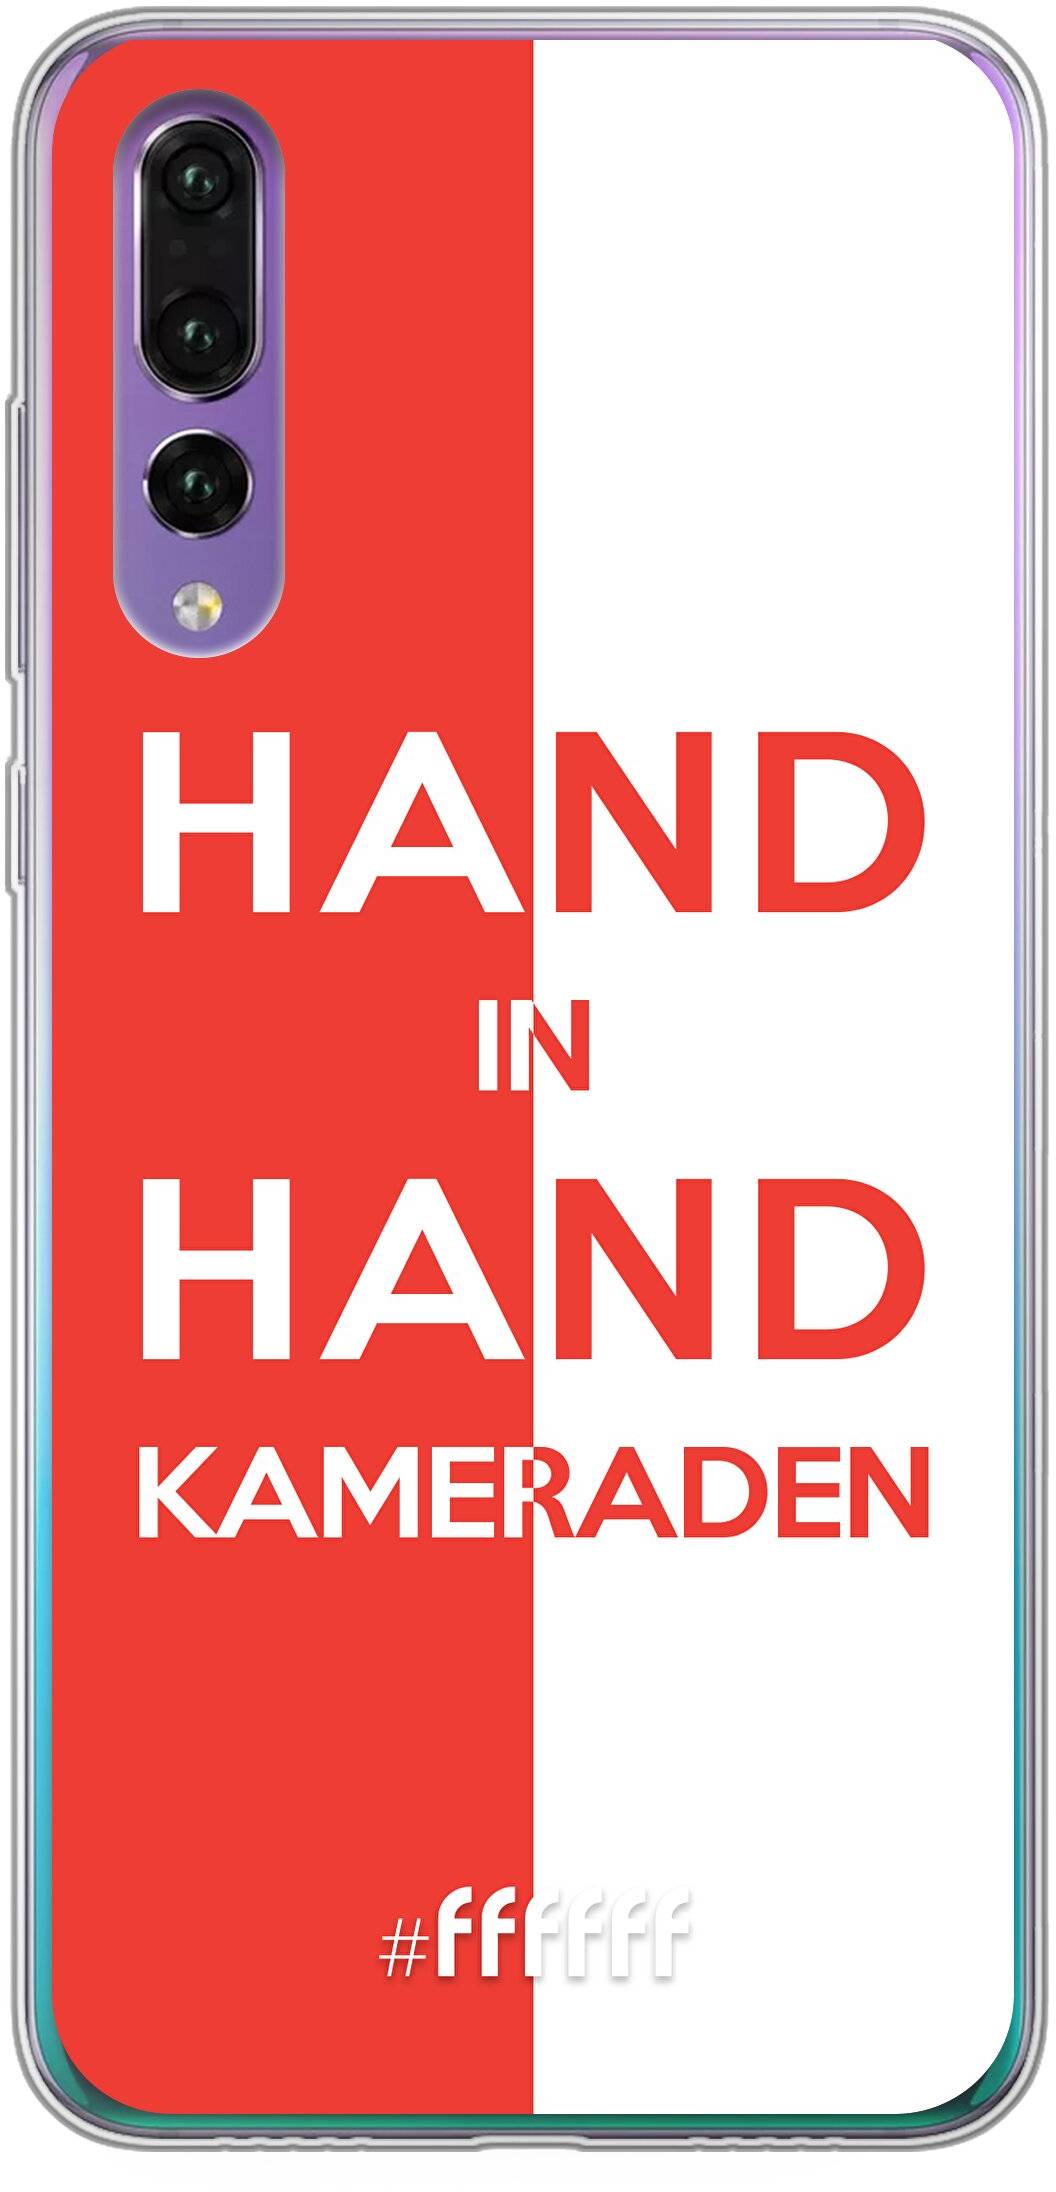 Feyenoord - Hand in hand, kameraden P30